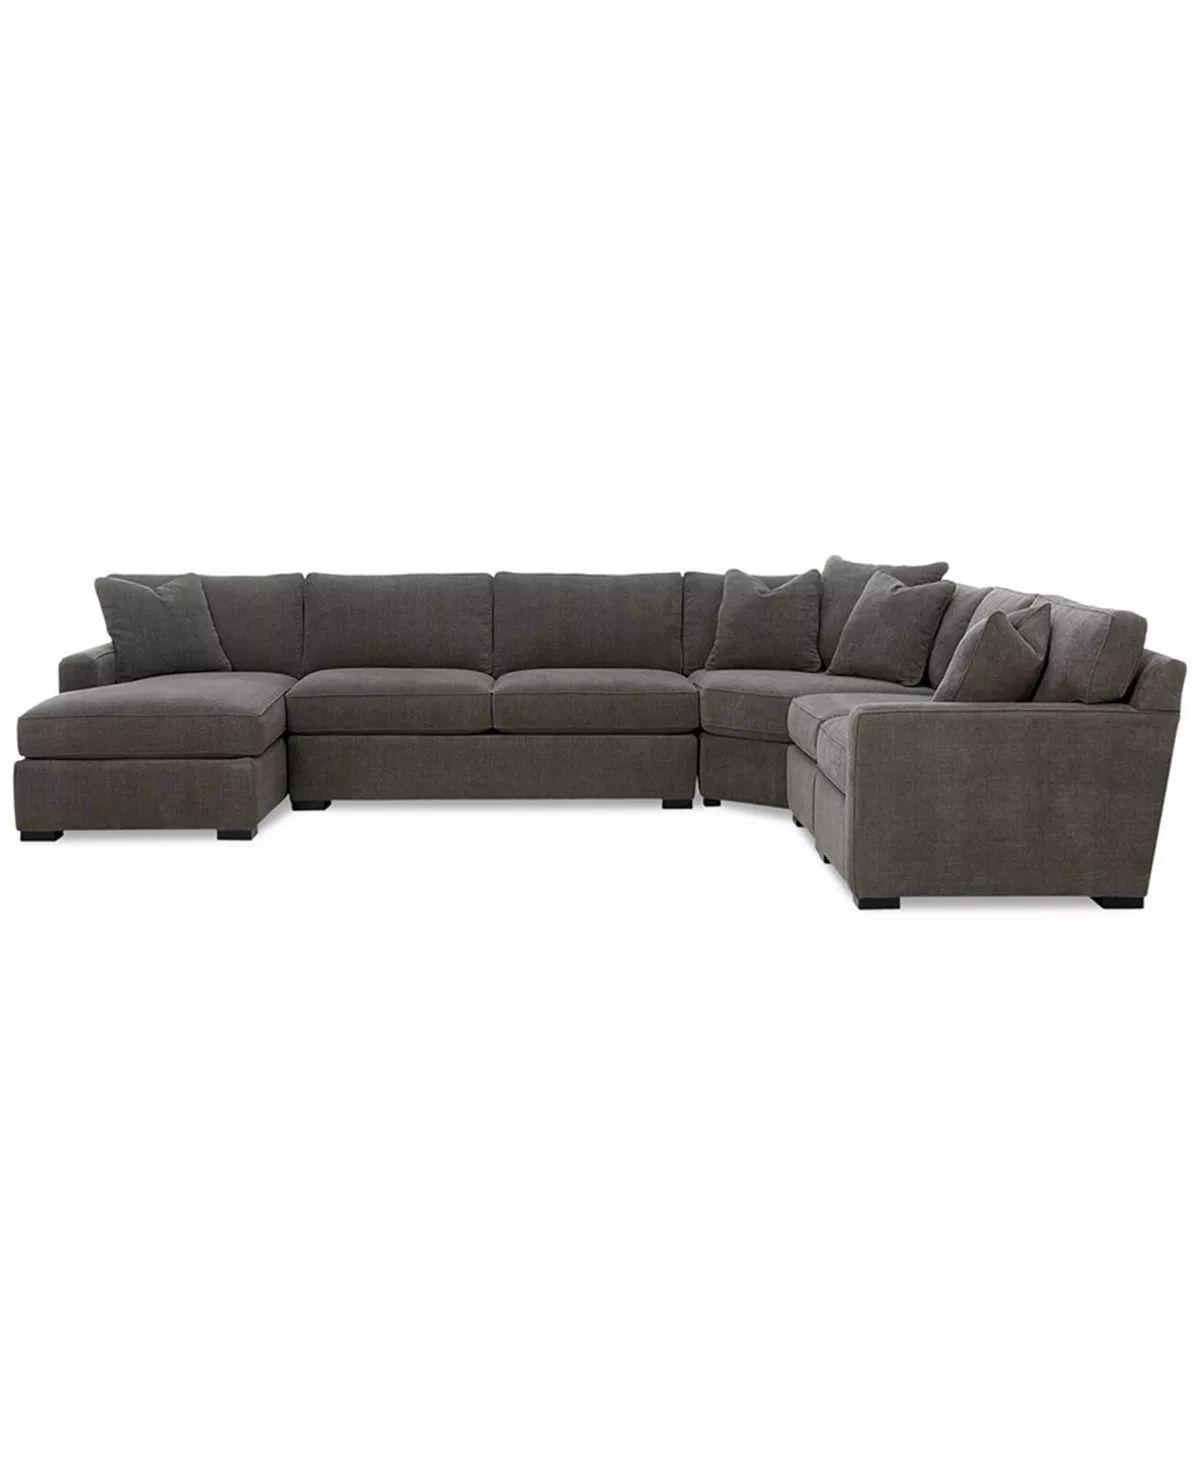 Furniture Radley 5-Piece Fabric Chaise Sectional Sofa, Created for Macy's - Macy's | Macys (US)